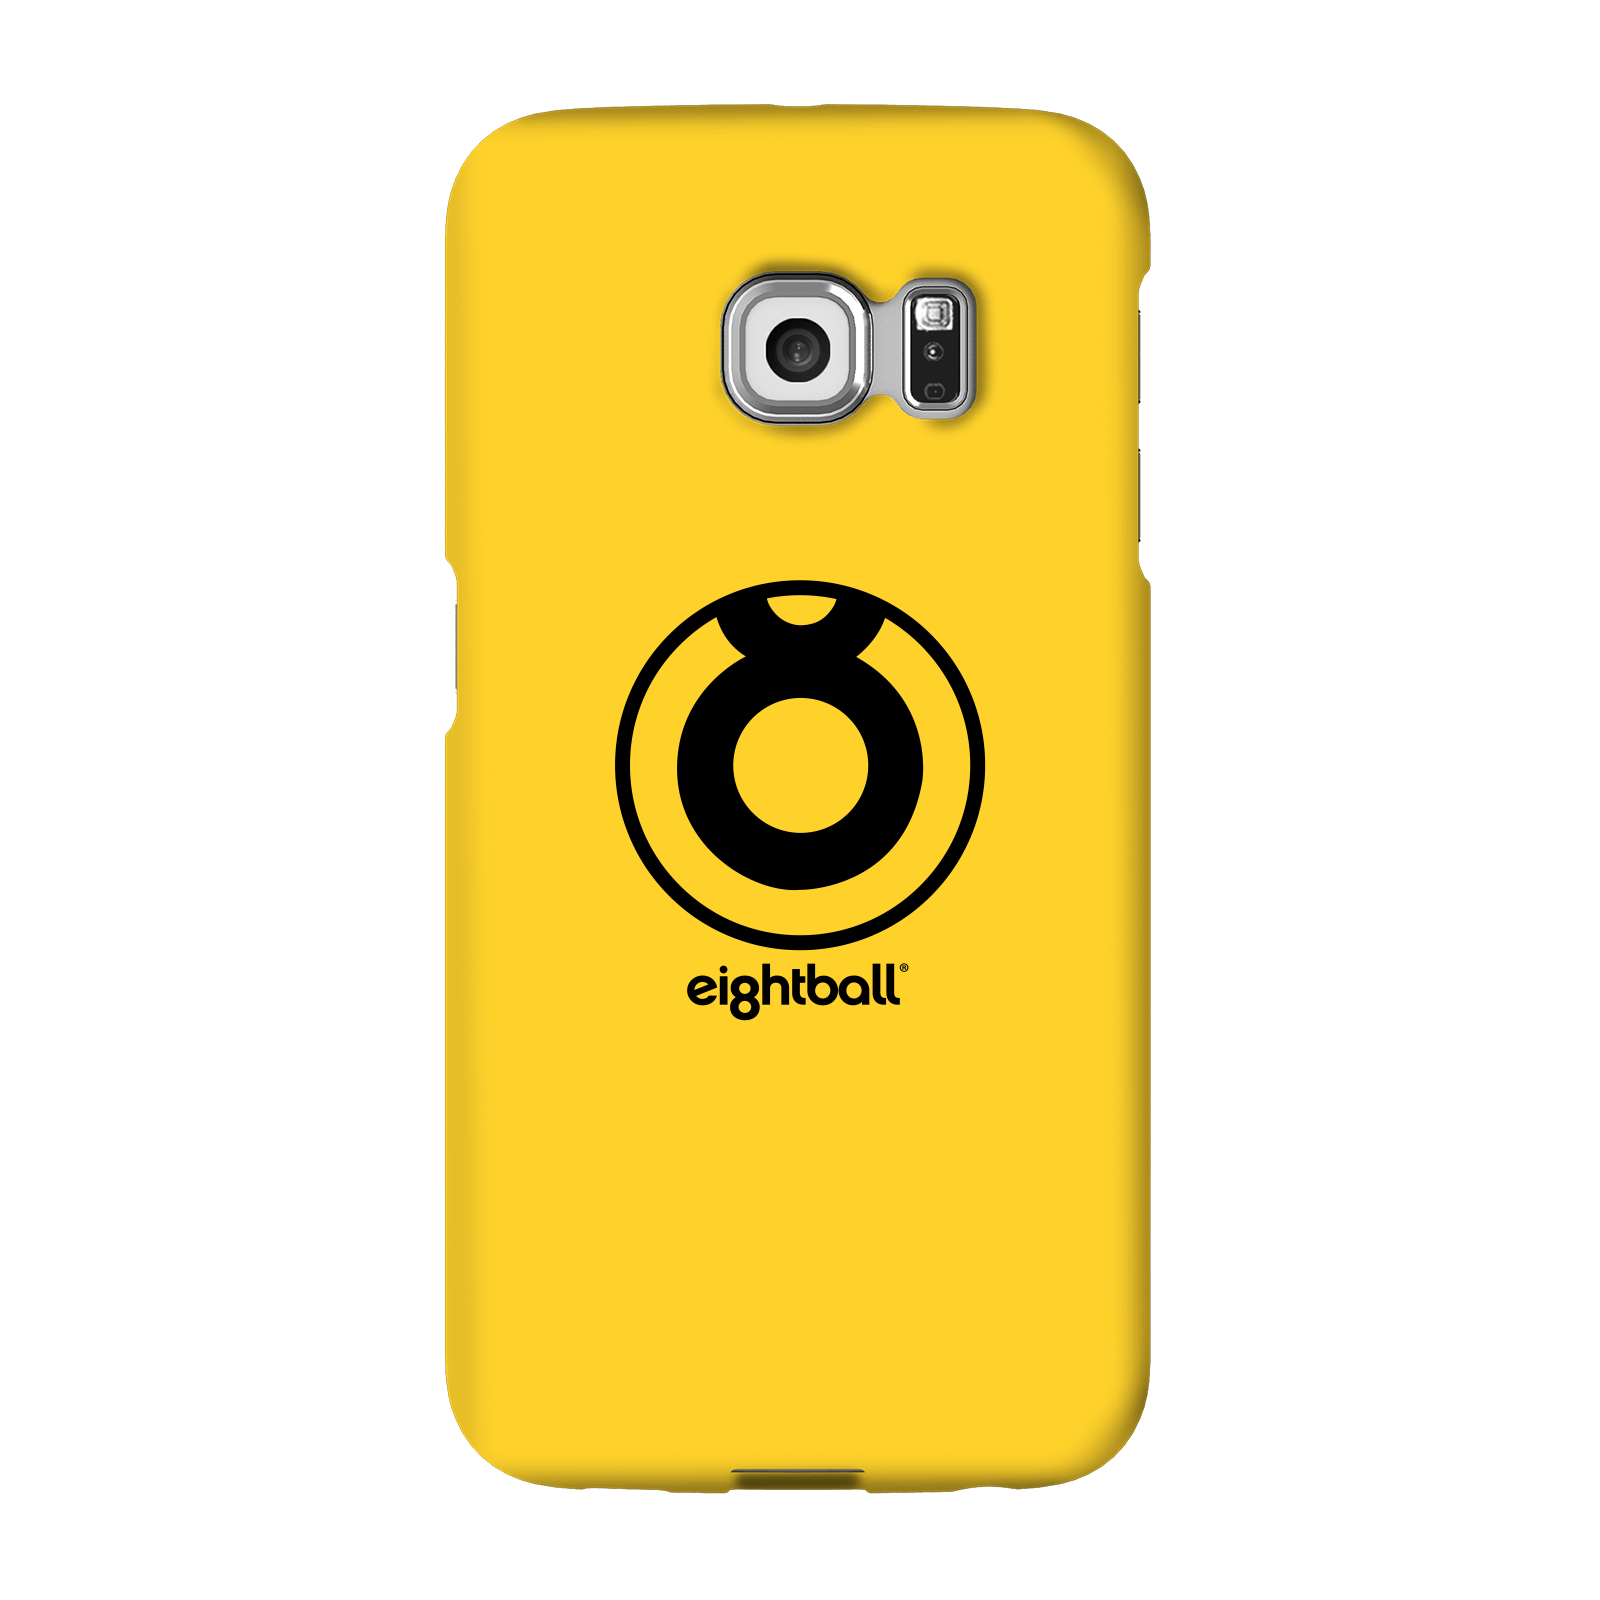 Funda Móvil Ei8htball Large Circle Logo para iPhone y Android - Samsung S6 Edge - Carcasa rígida - Mate